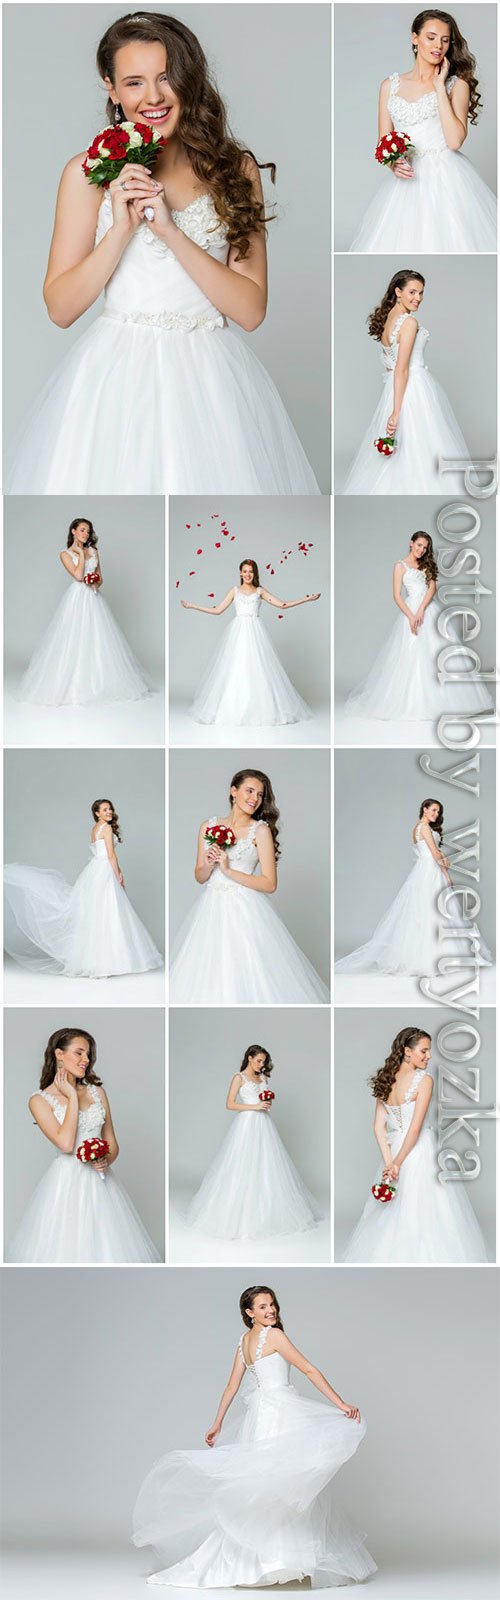 Happy bride in luxury wedding dress stock photo